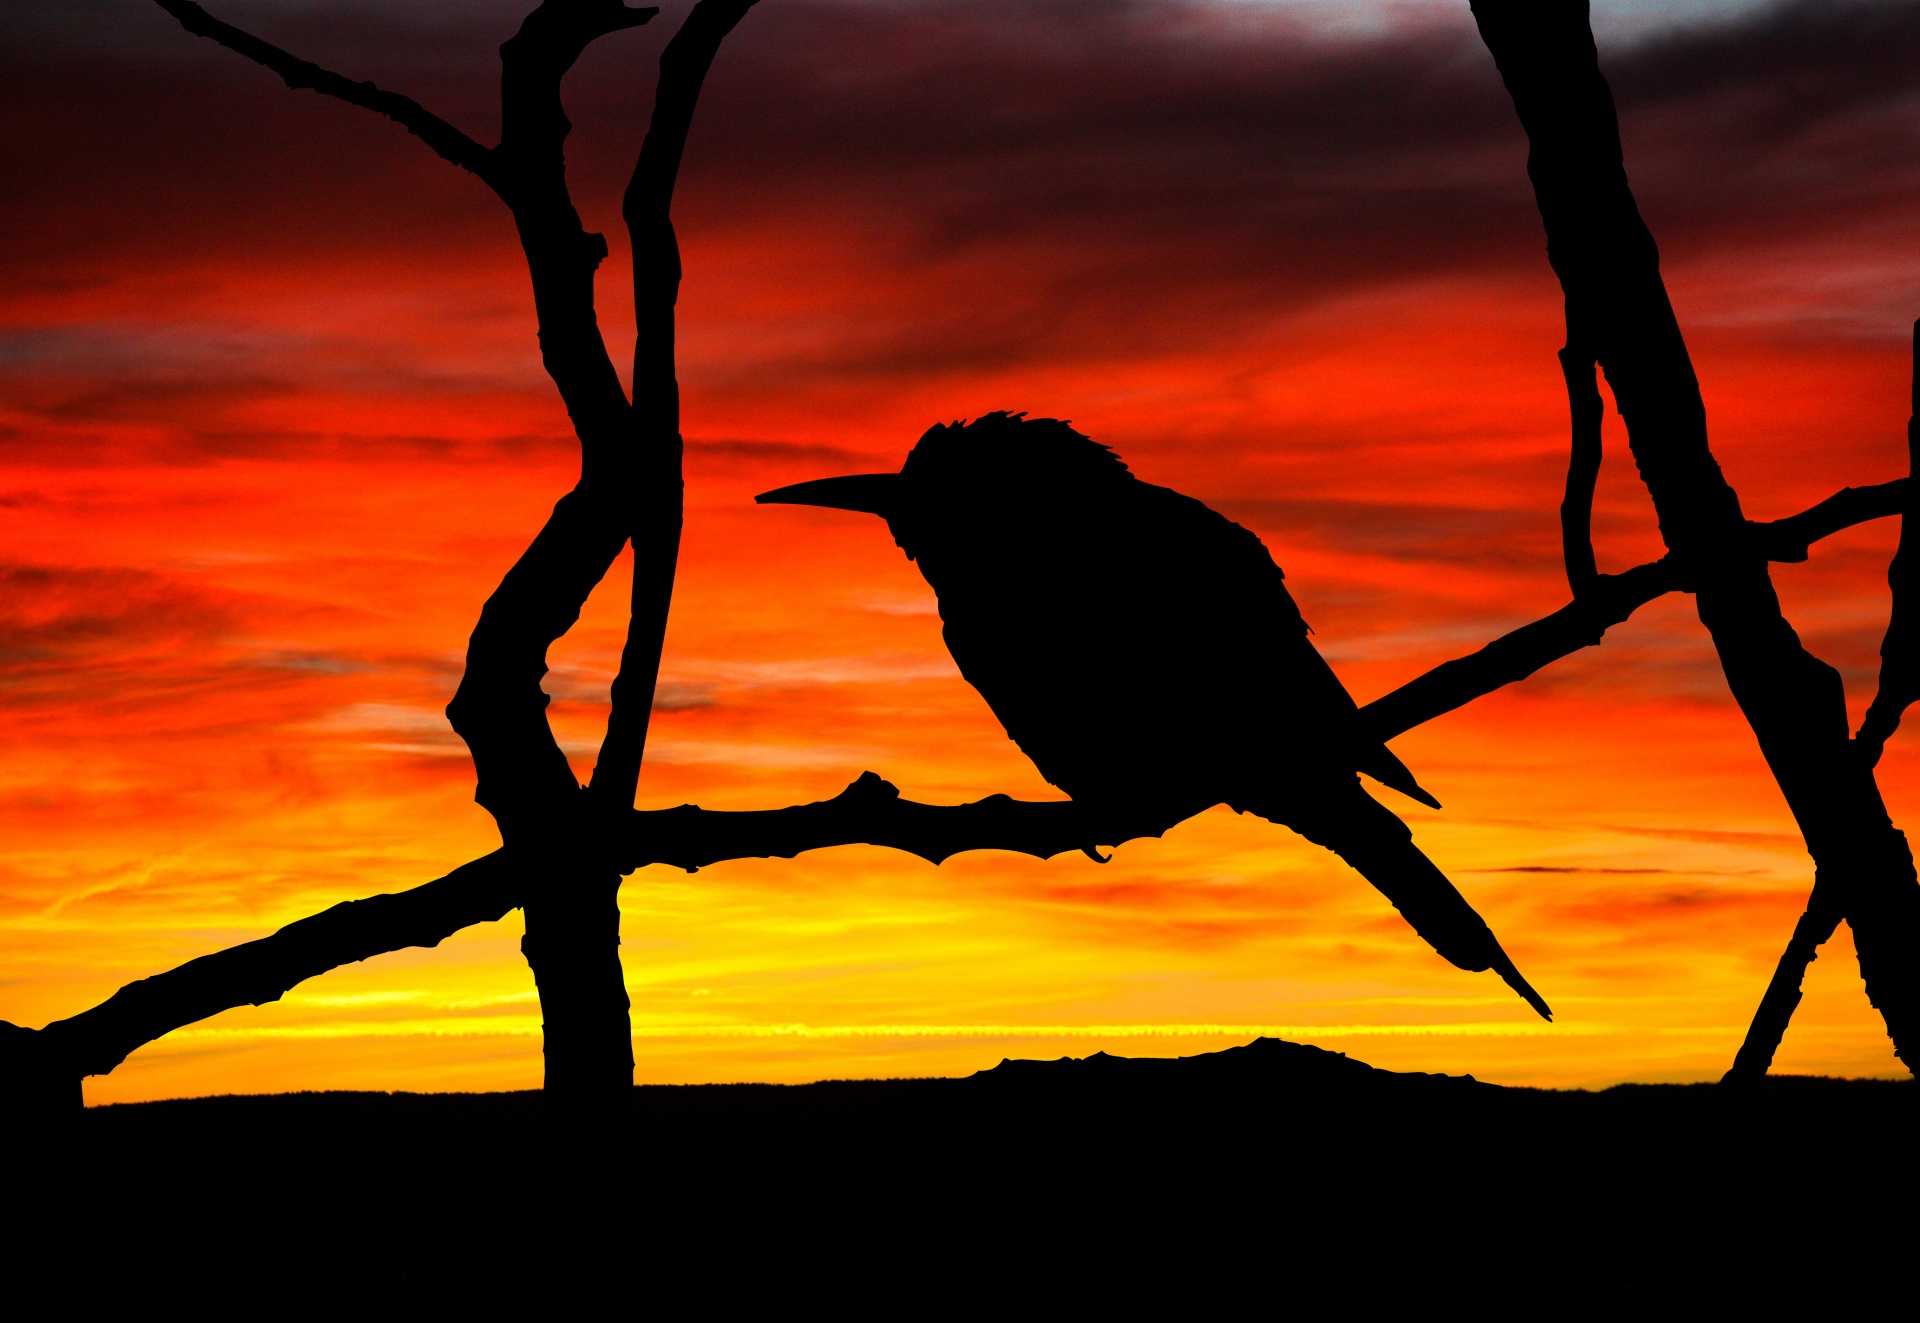 Bird Silhouette On Branch